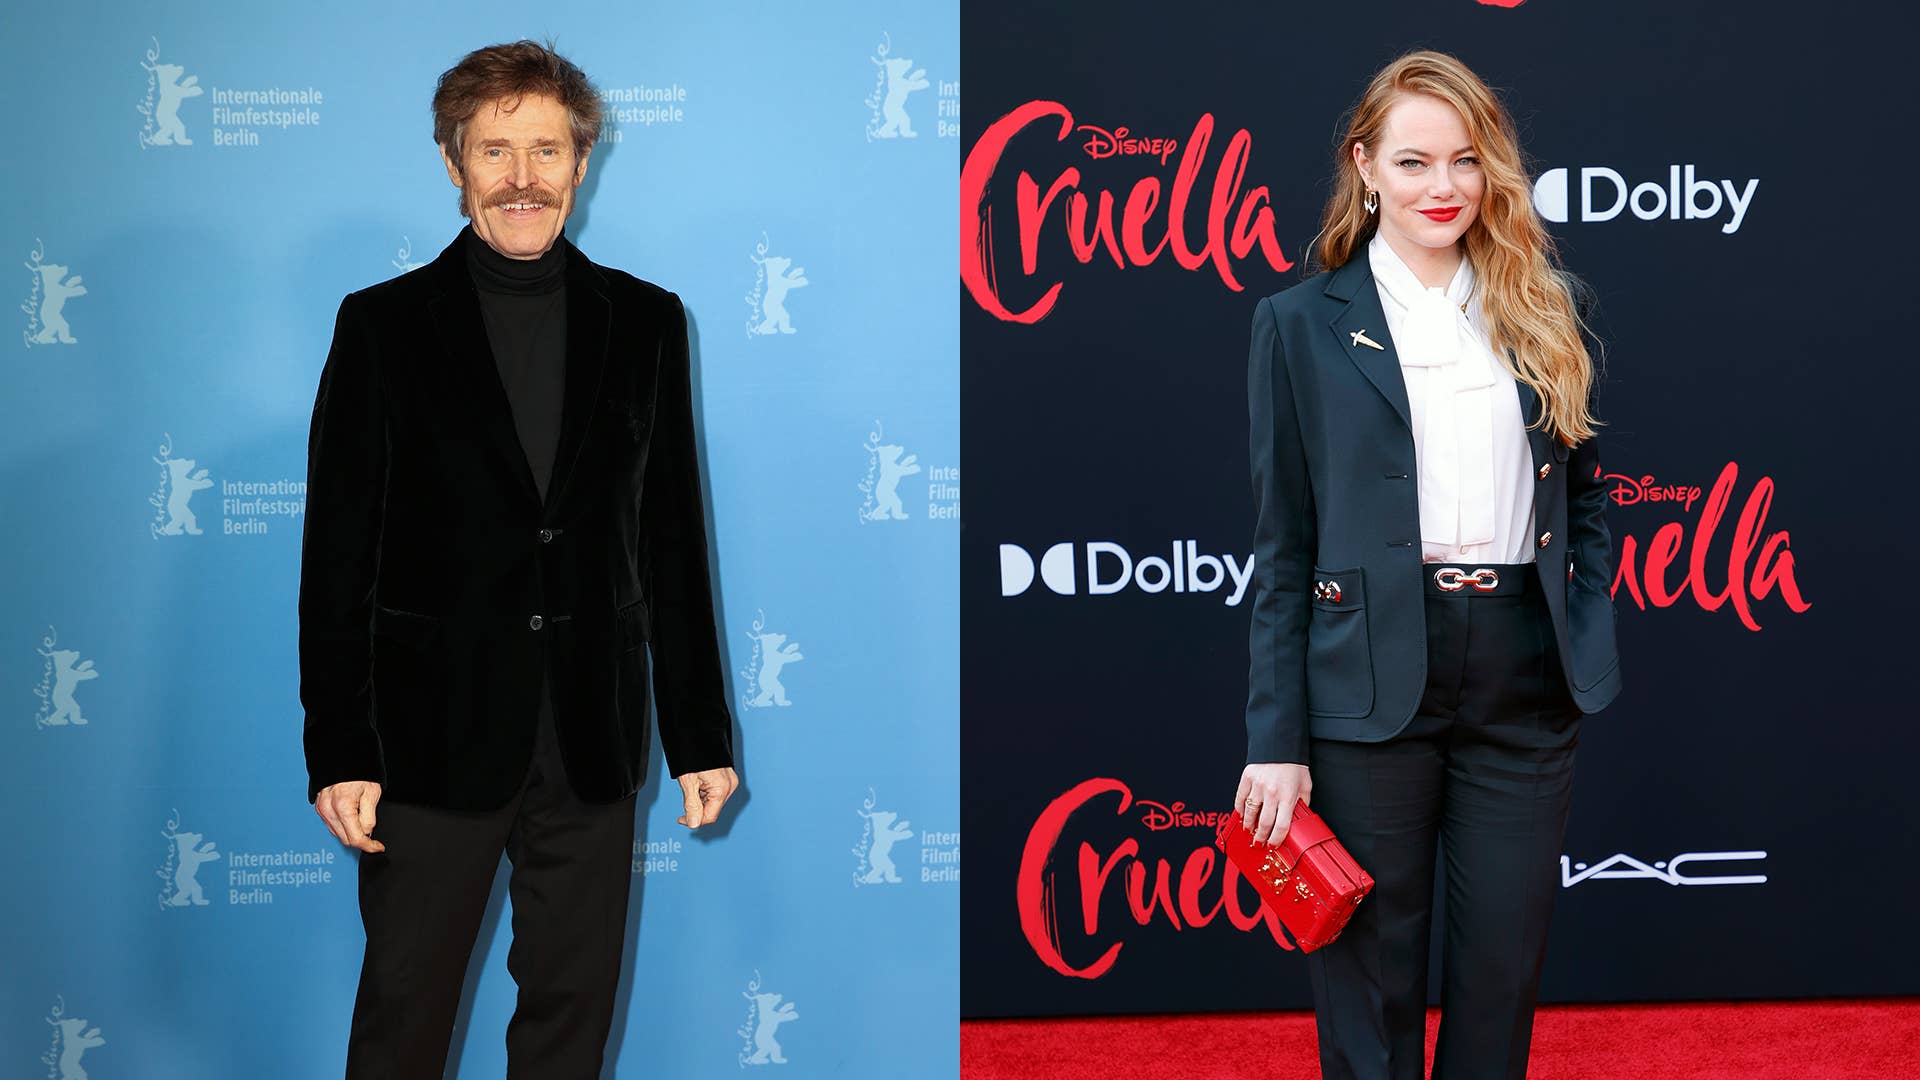 Willem Dafoe and the Inside premiere and Emma Stone at the Cruella Premiere